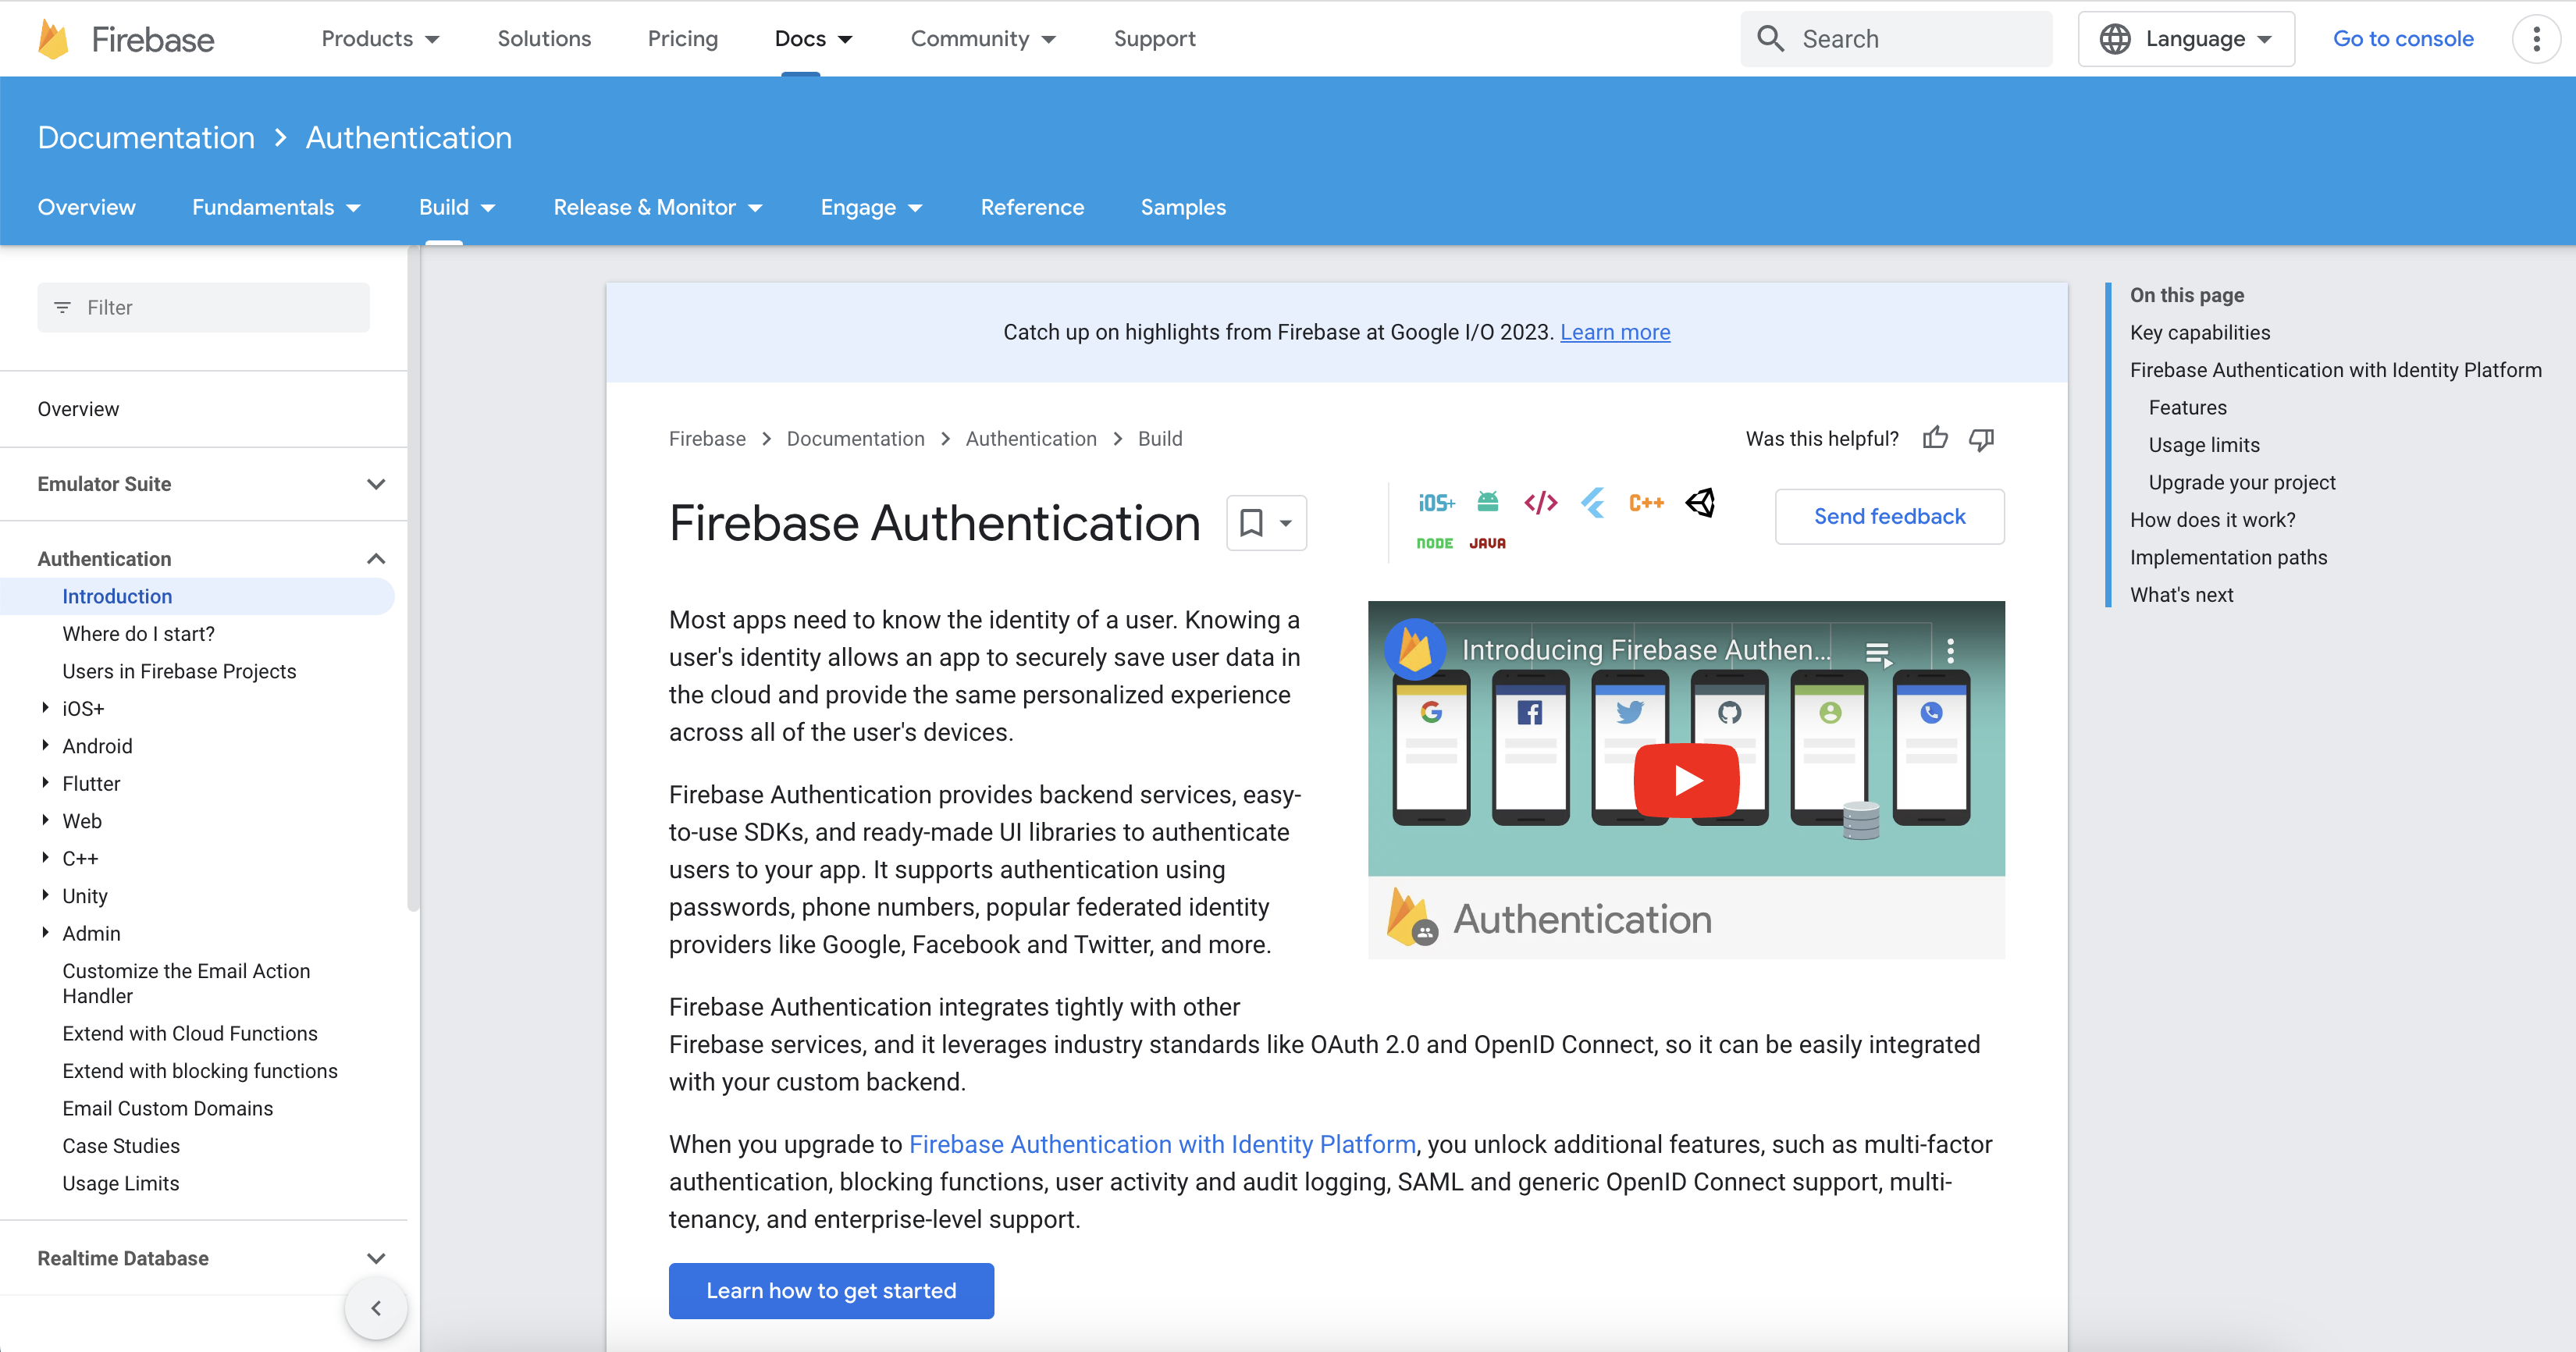 A screenshot of Firebase's homepage